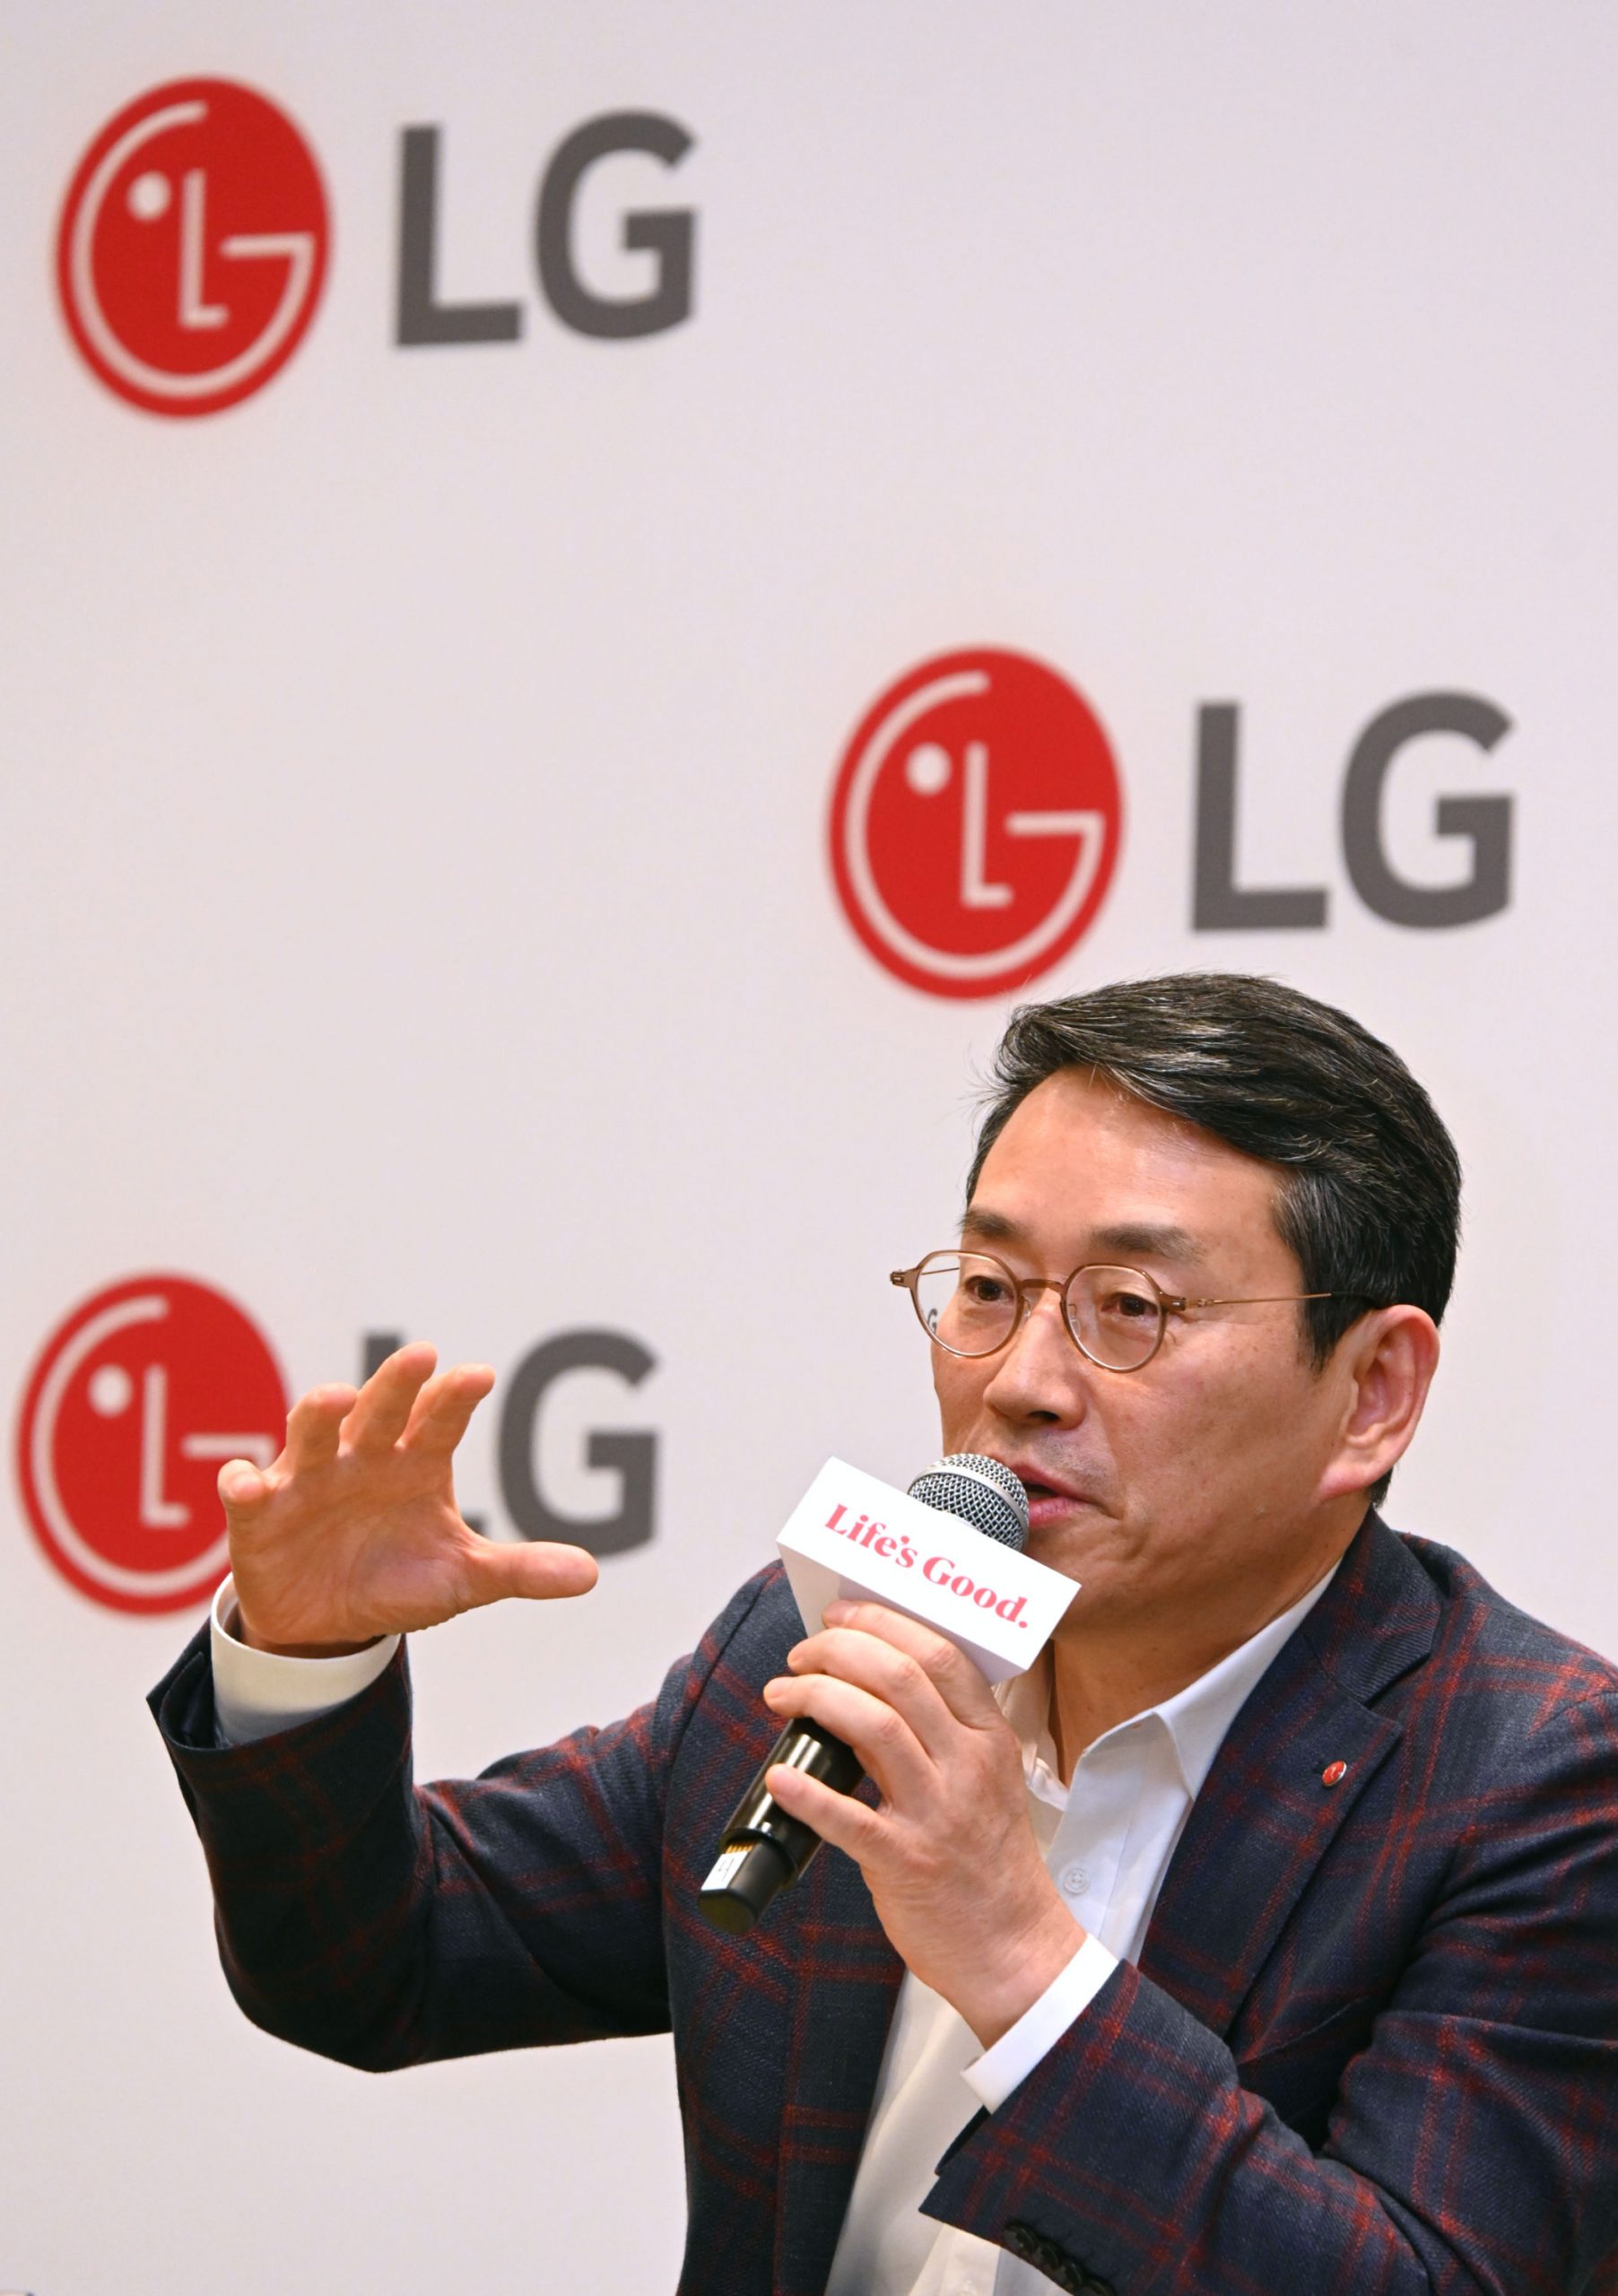 CEO de LG compartió el plan para cumplir la meta “Future vision 2030”